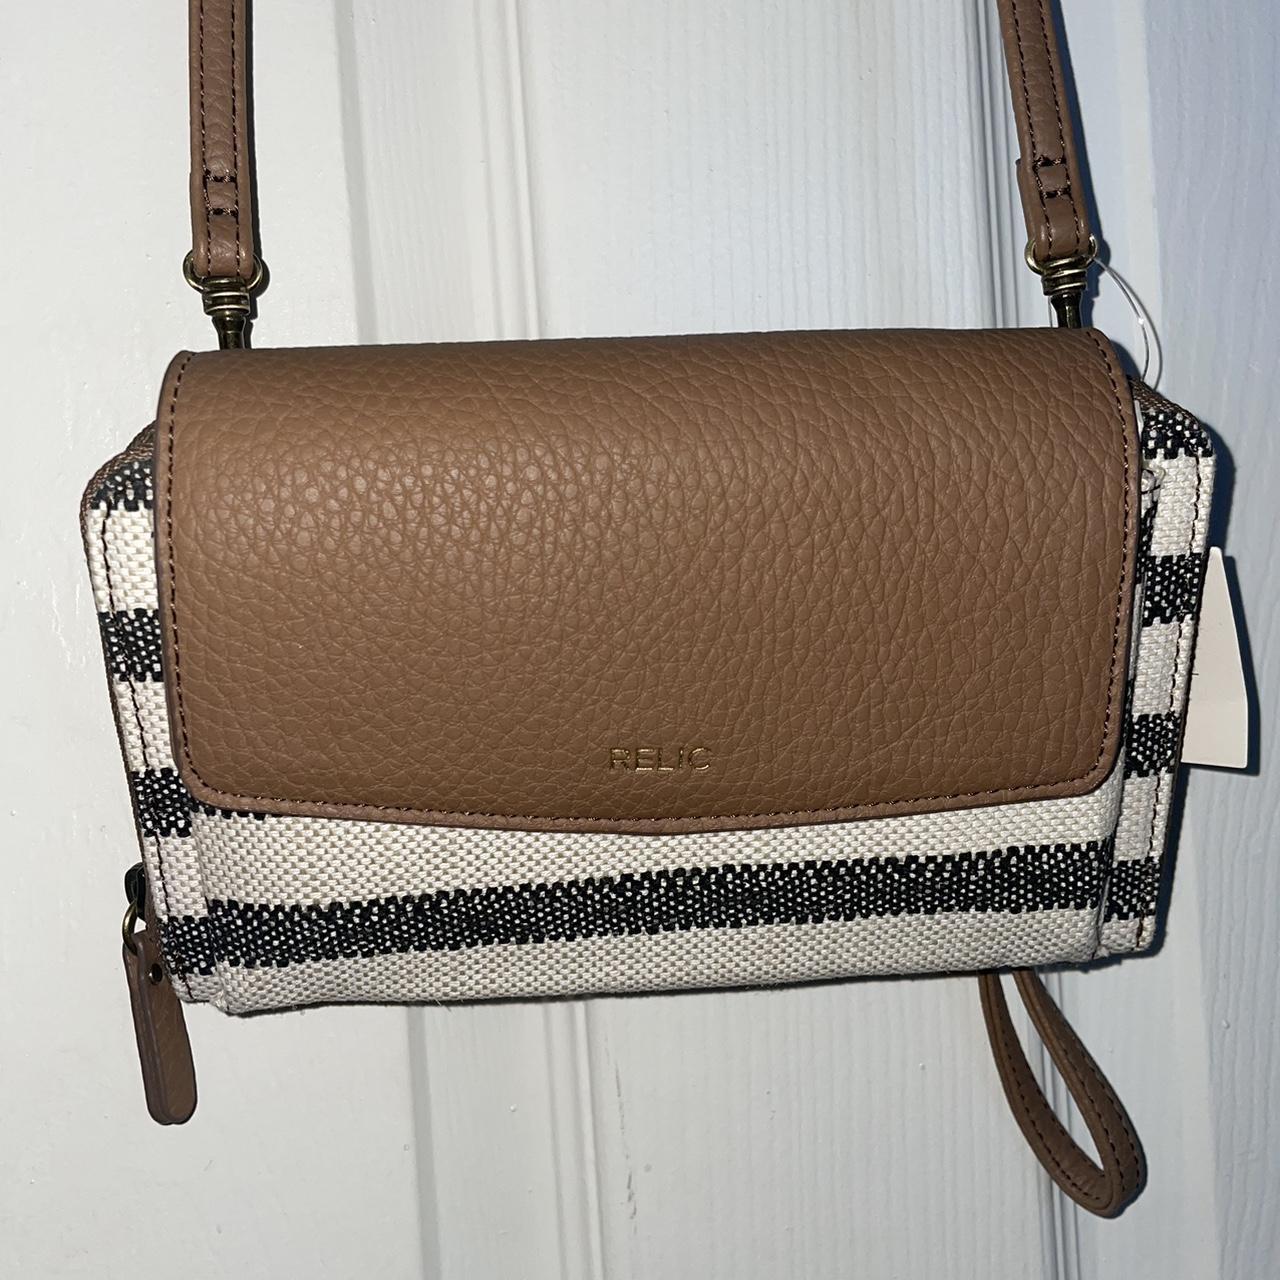 Relic Top Zip Handbags | Mercari